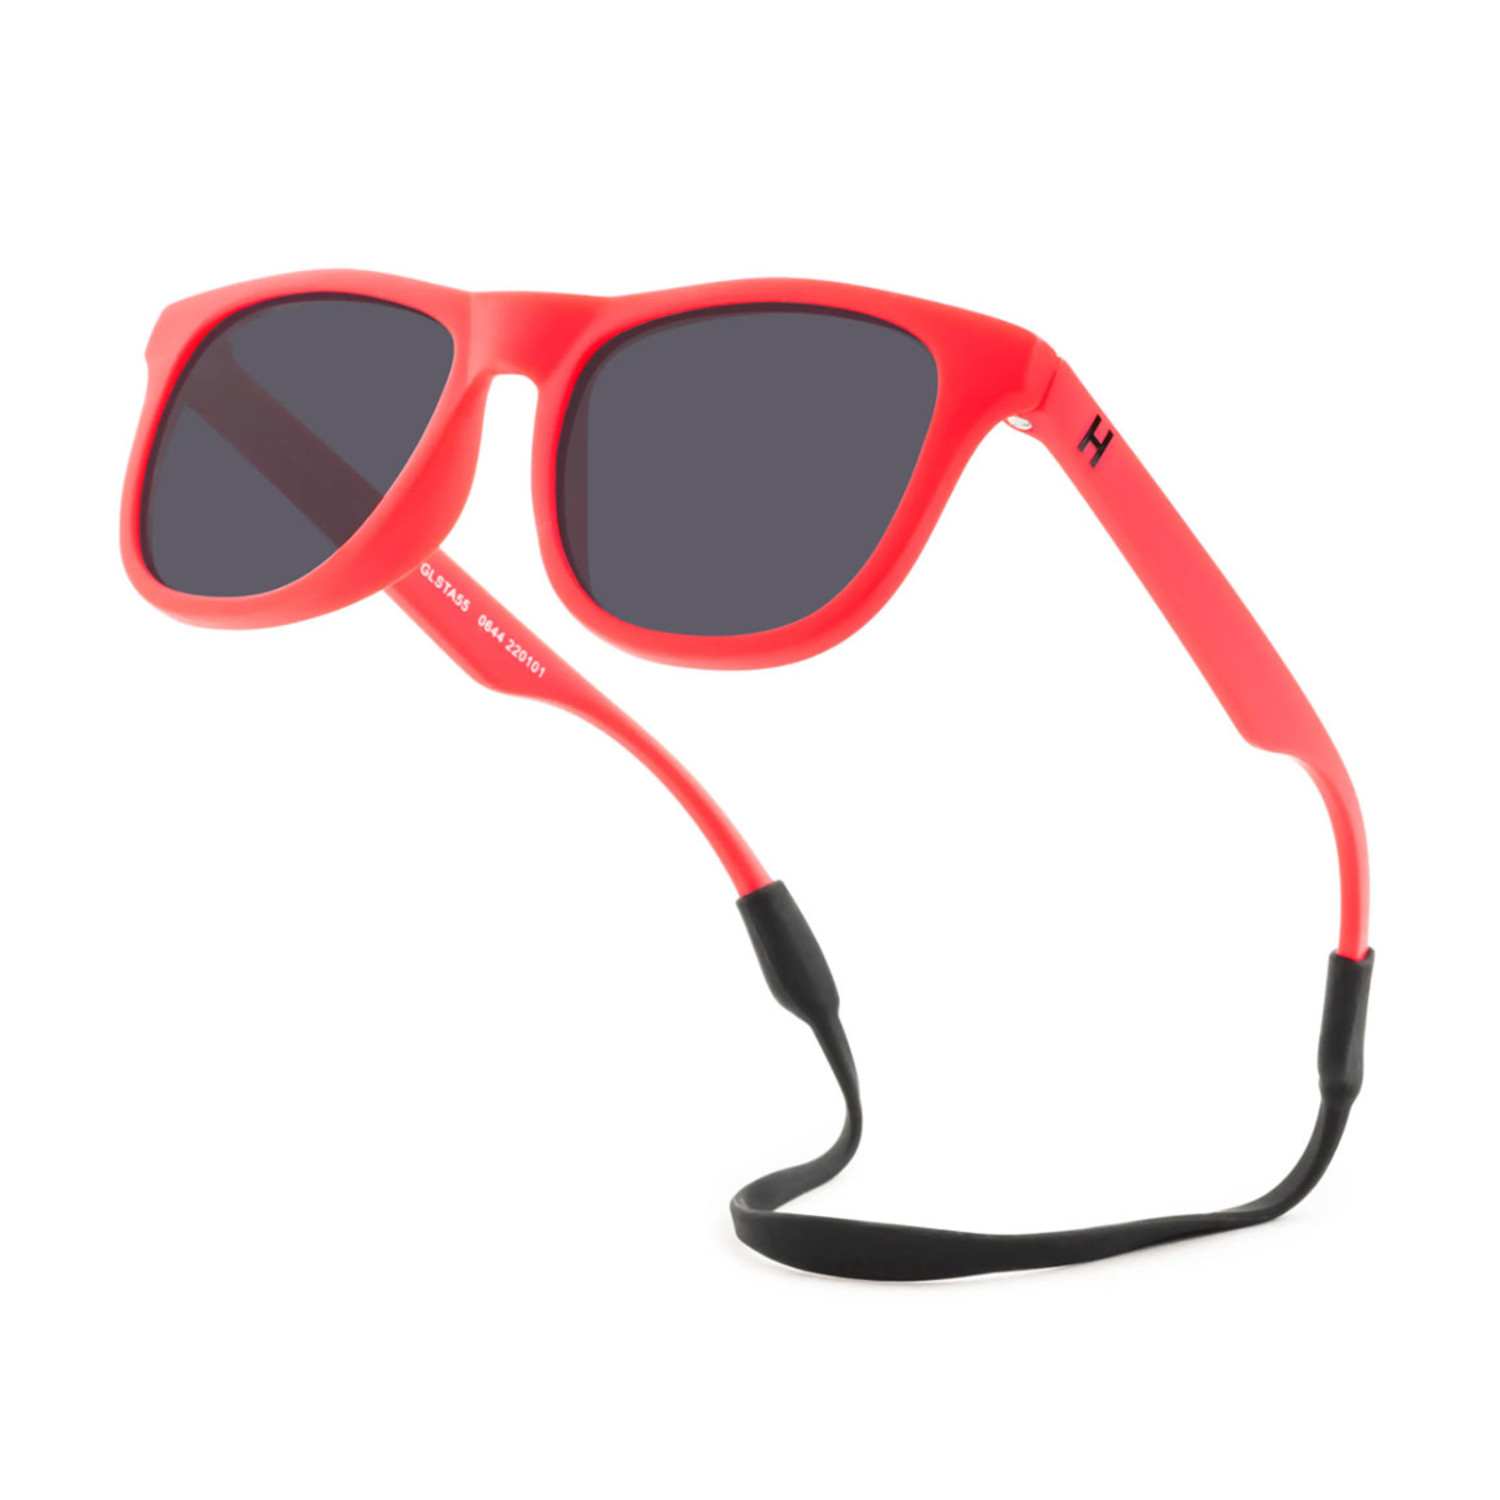 Sunglasses Kids 0-2 yrs. Coral - Lucky Wang nyc